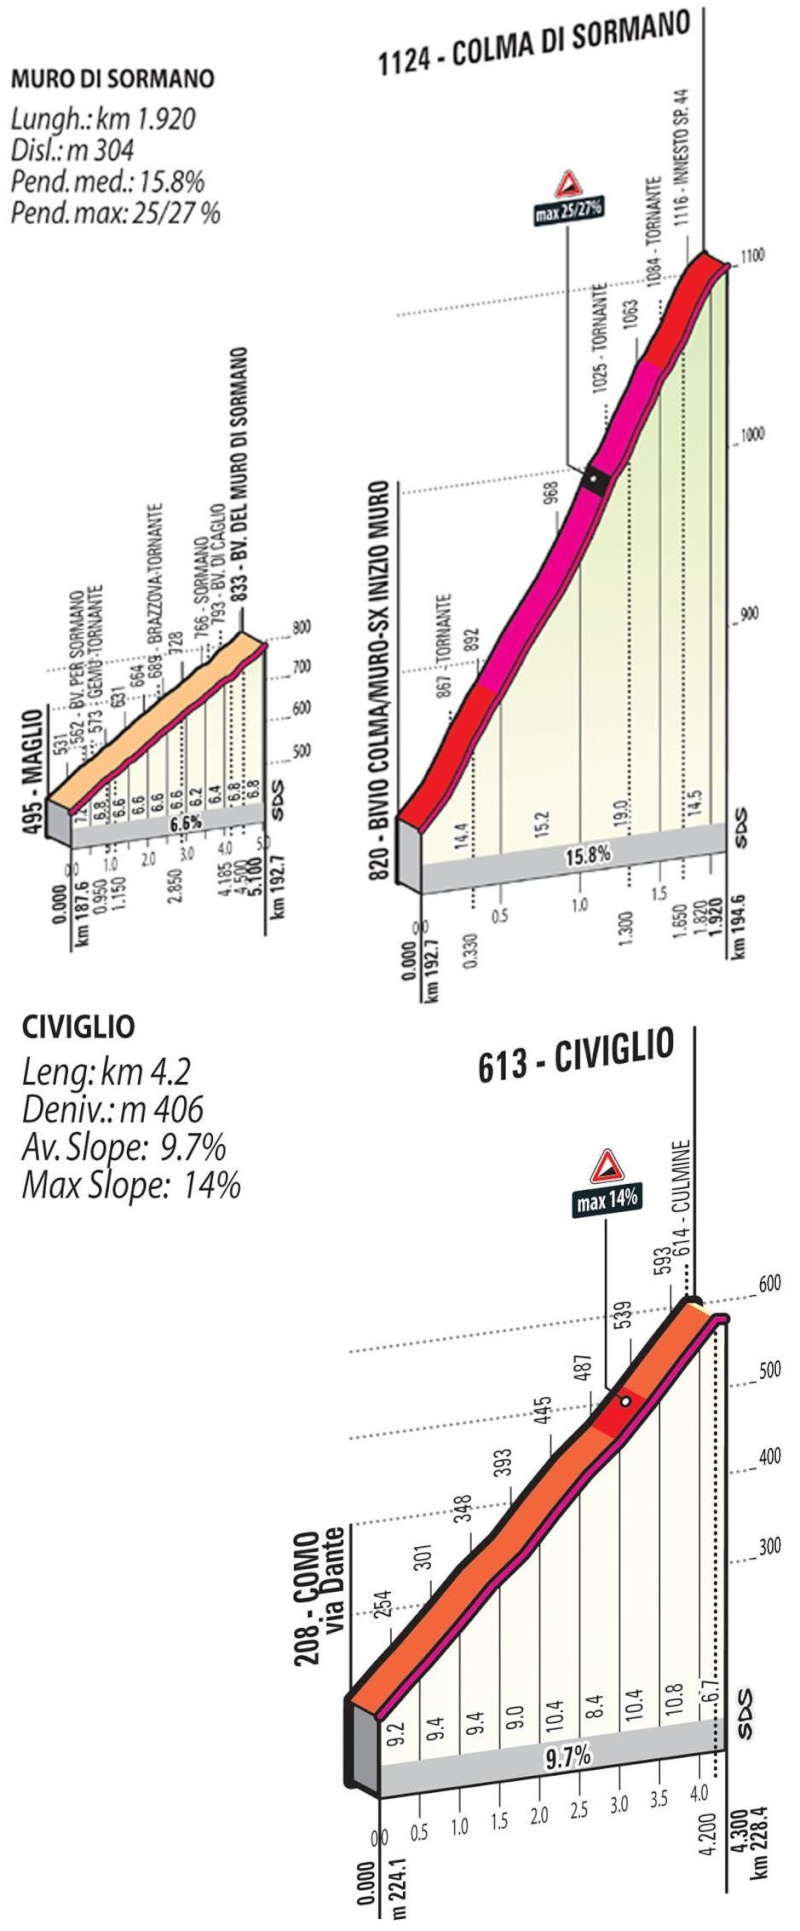 Giro - Il Lombardia (Giro di Lombardia) 2015 - (4 ottobre 2015) Sorman10